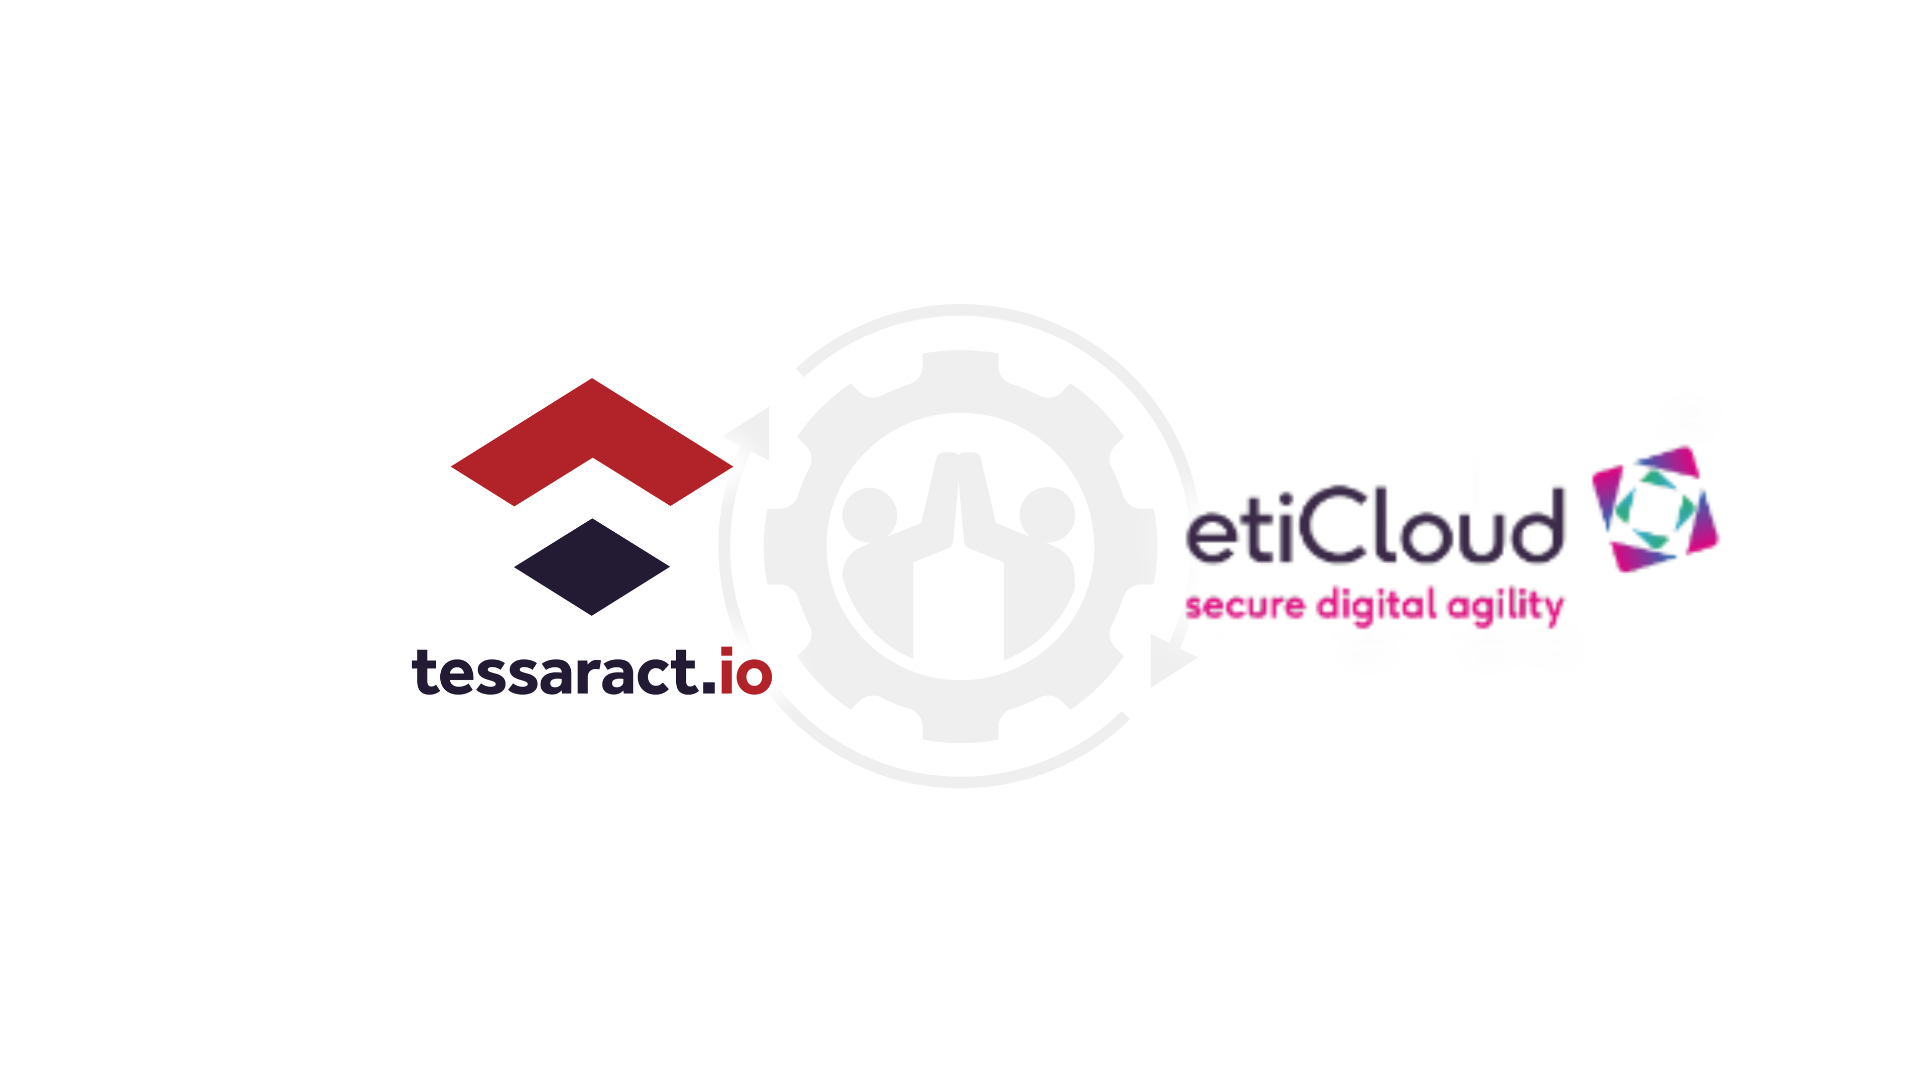 Cooperating Tessaract & etiCloud